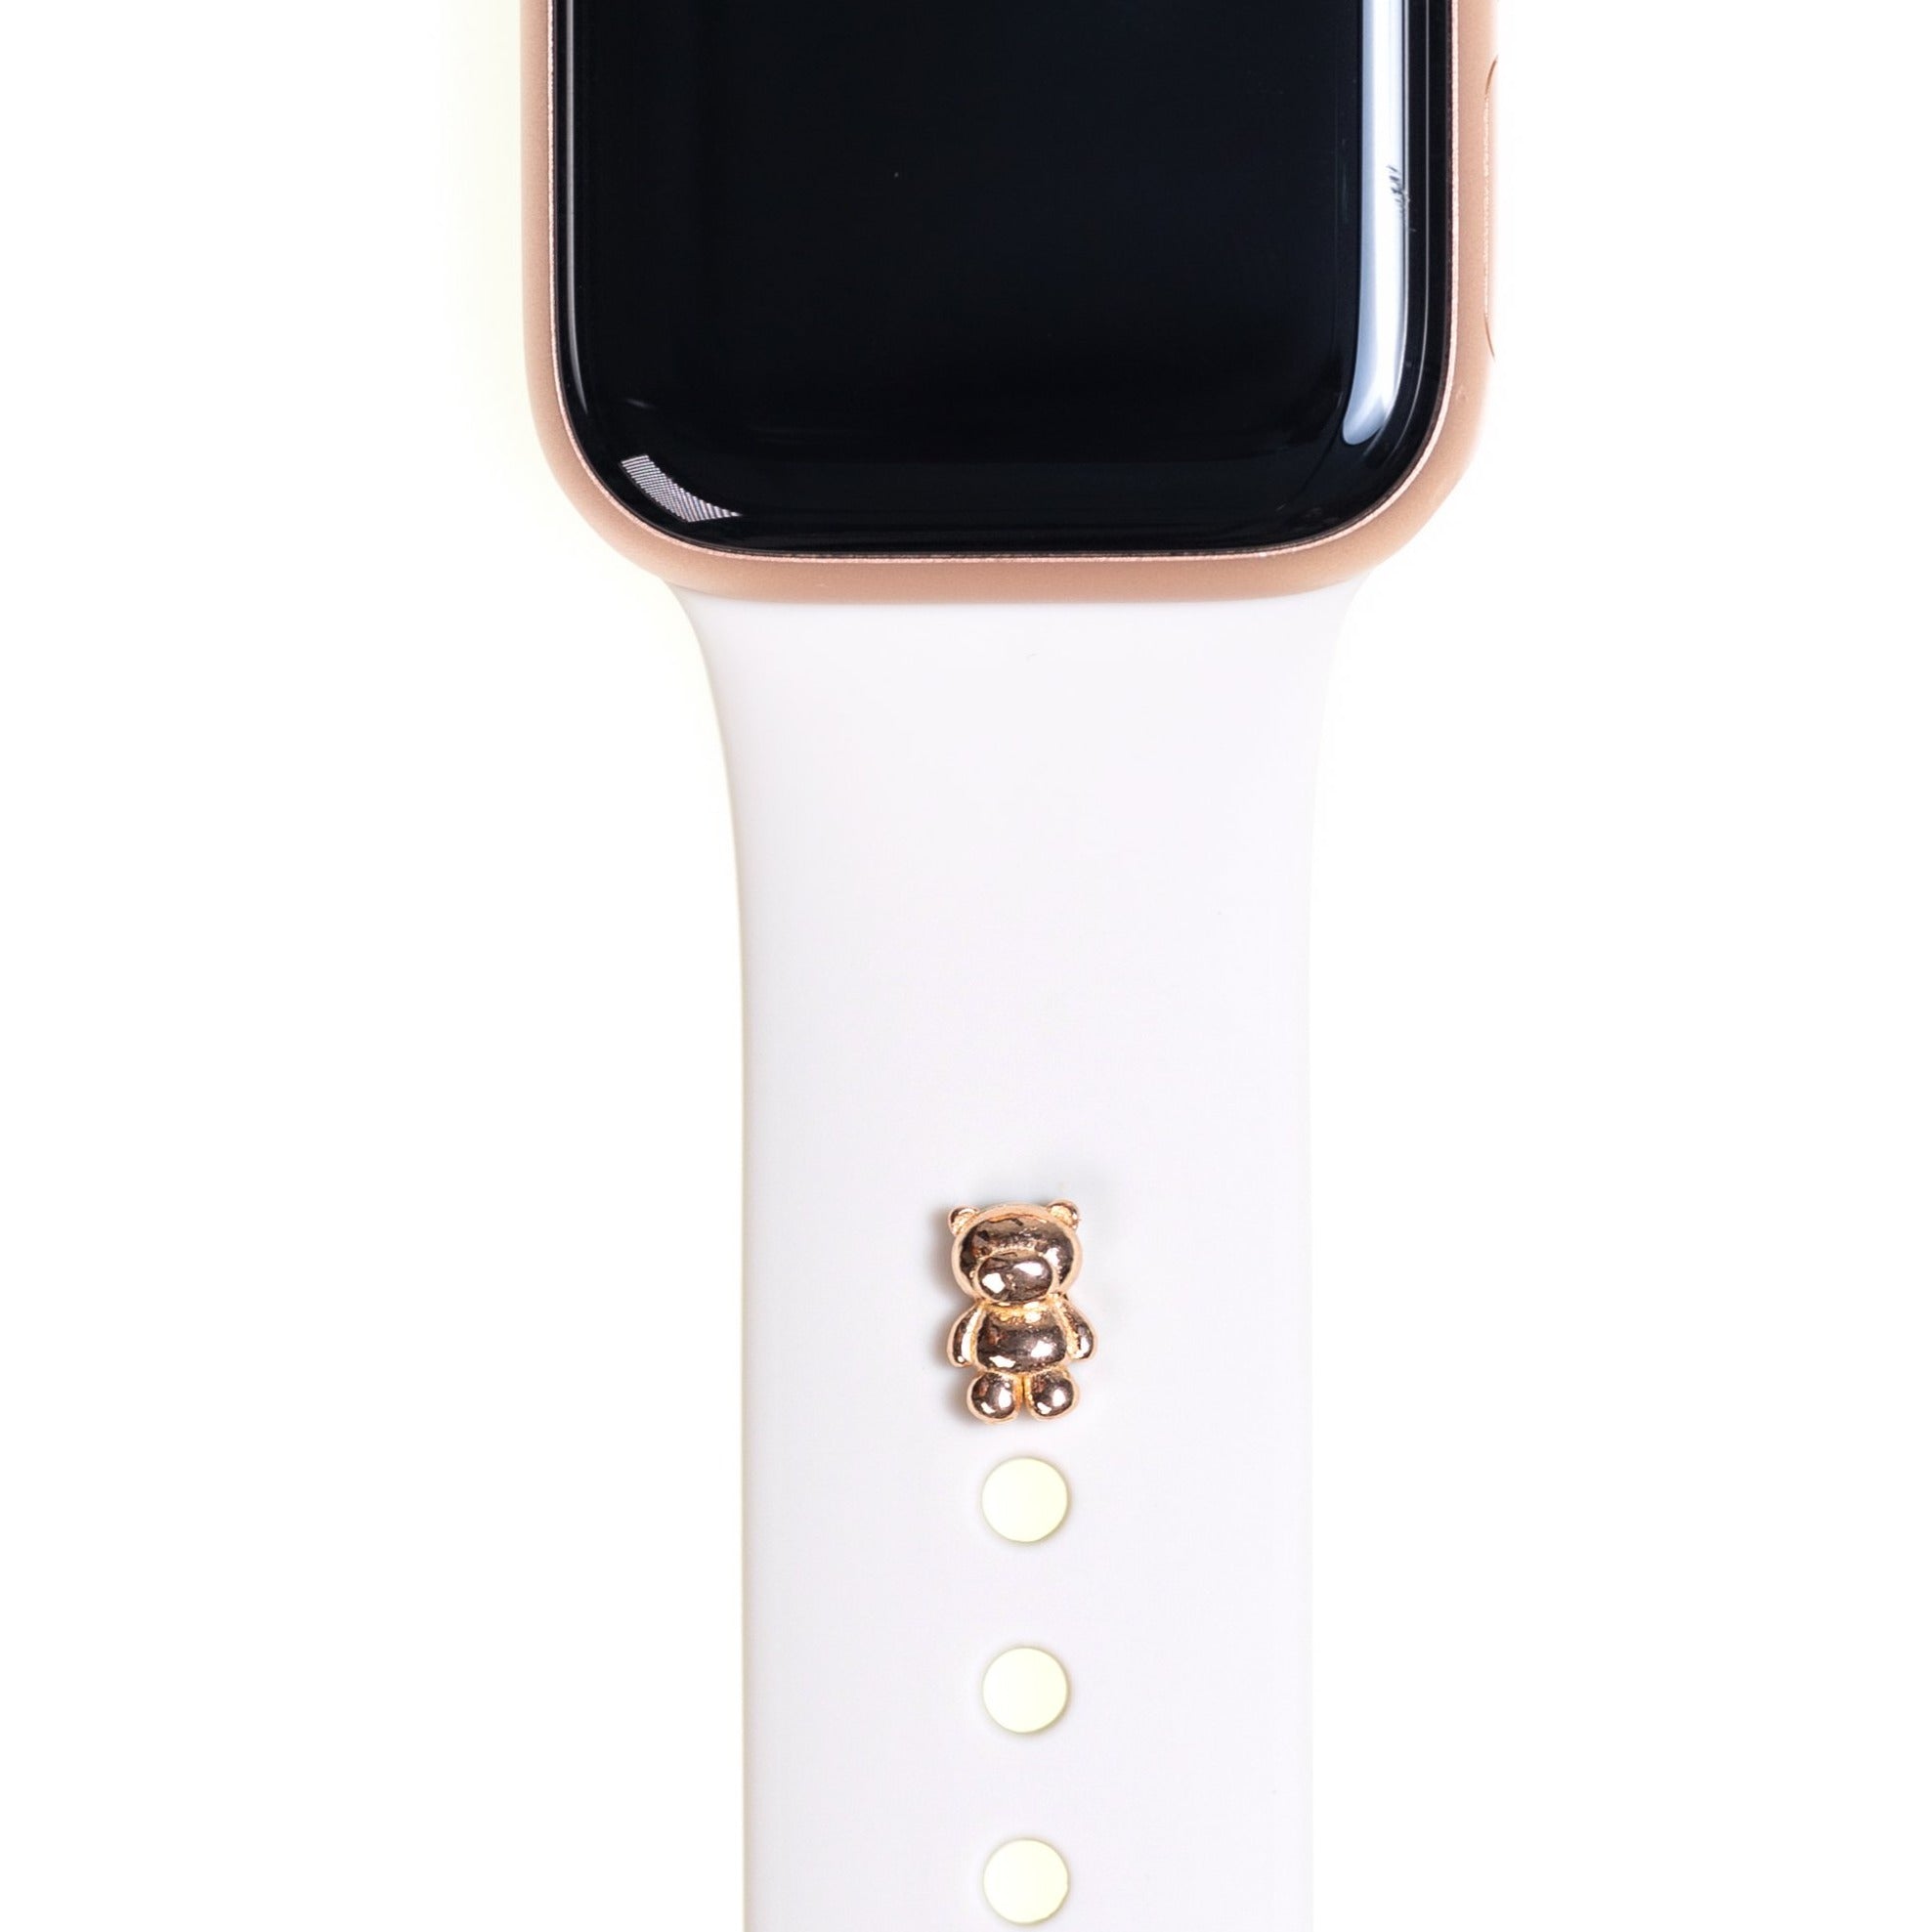 Bear • Apple Watch Band's Charm